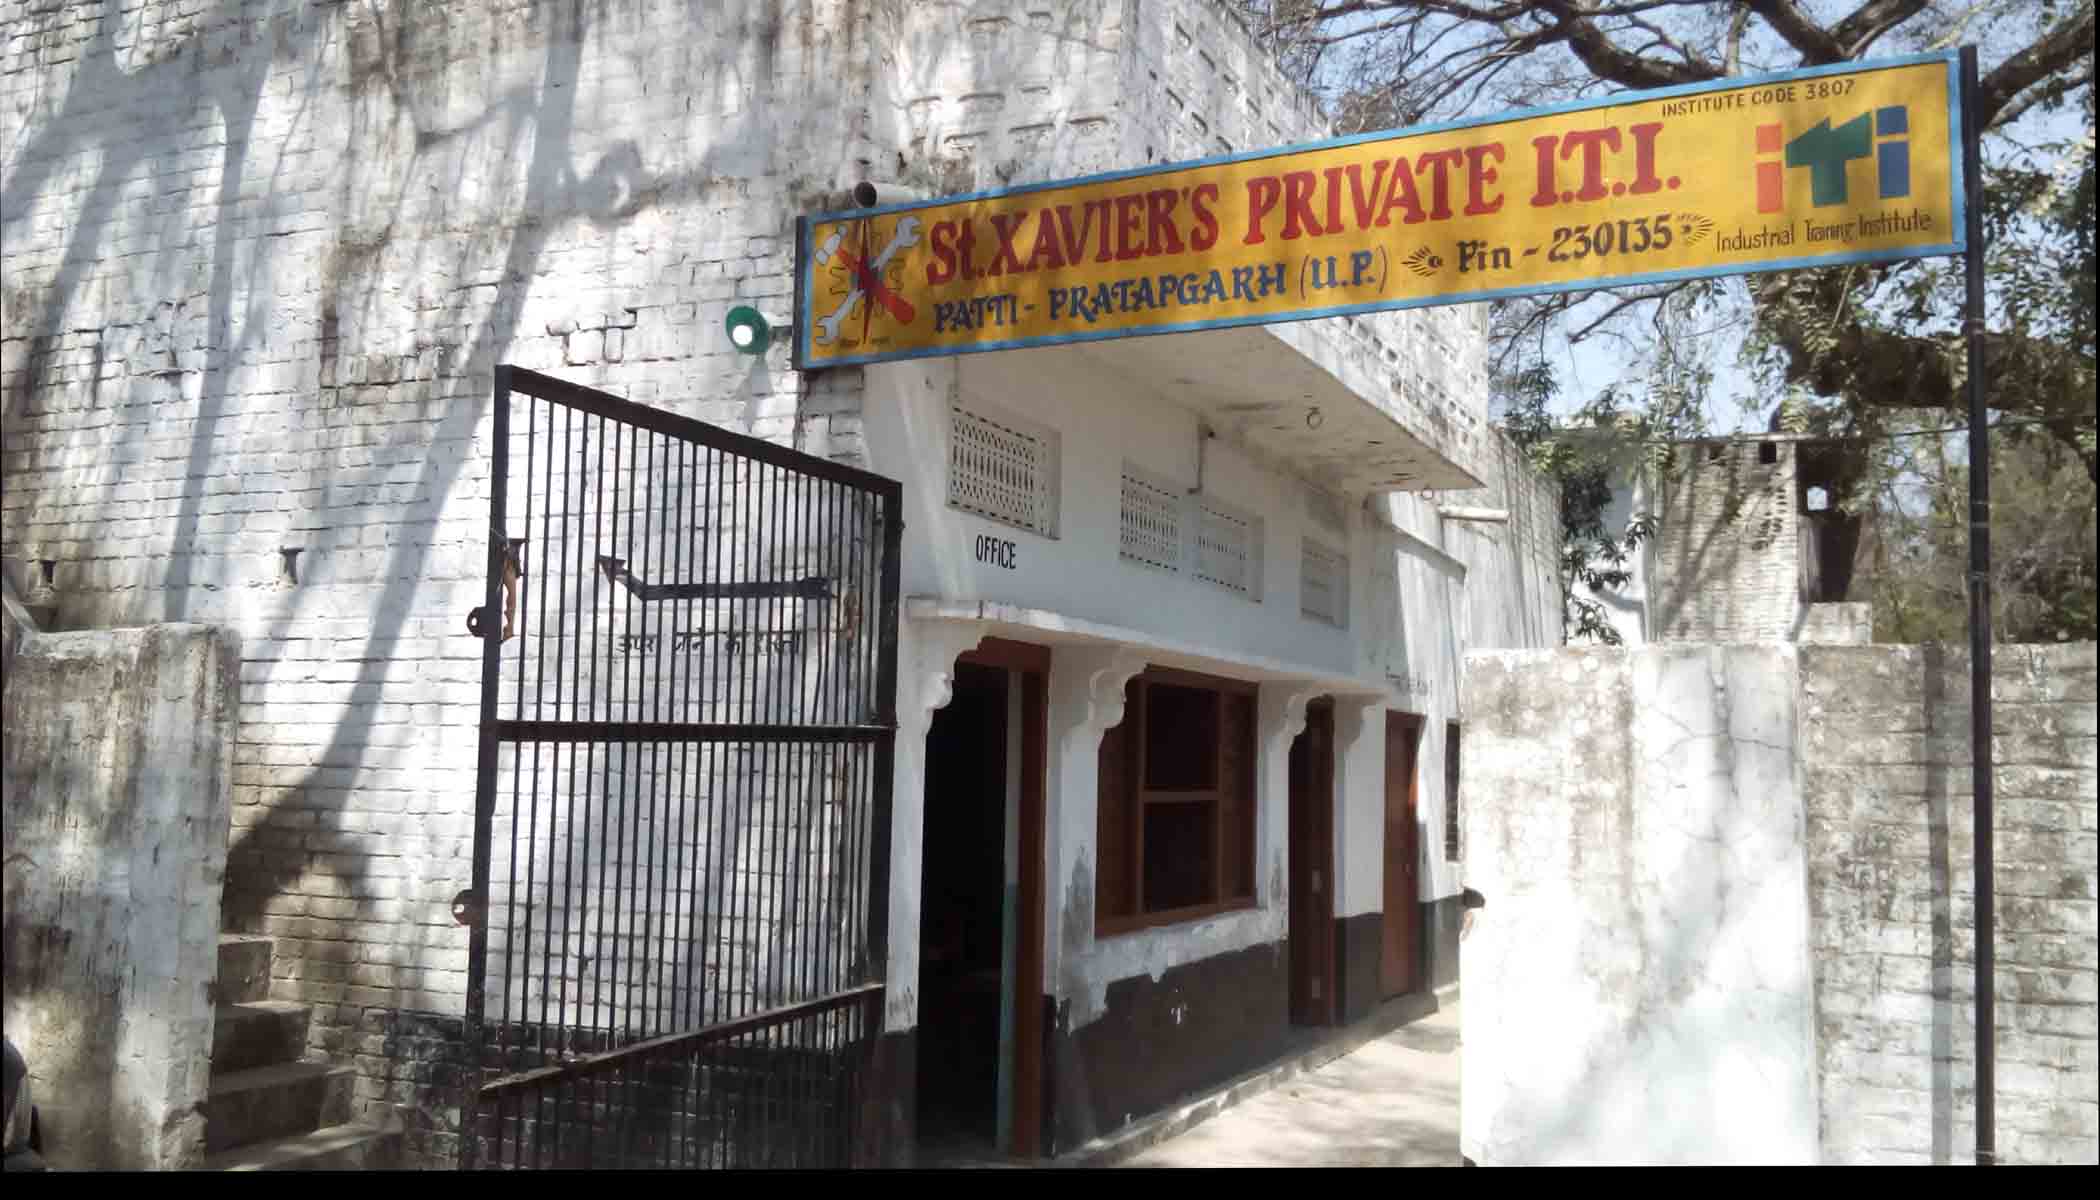 St. Xavier's School, Pratapgarh Patti